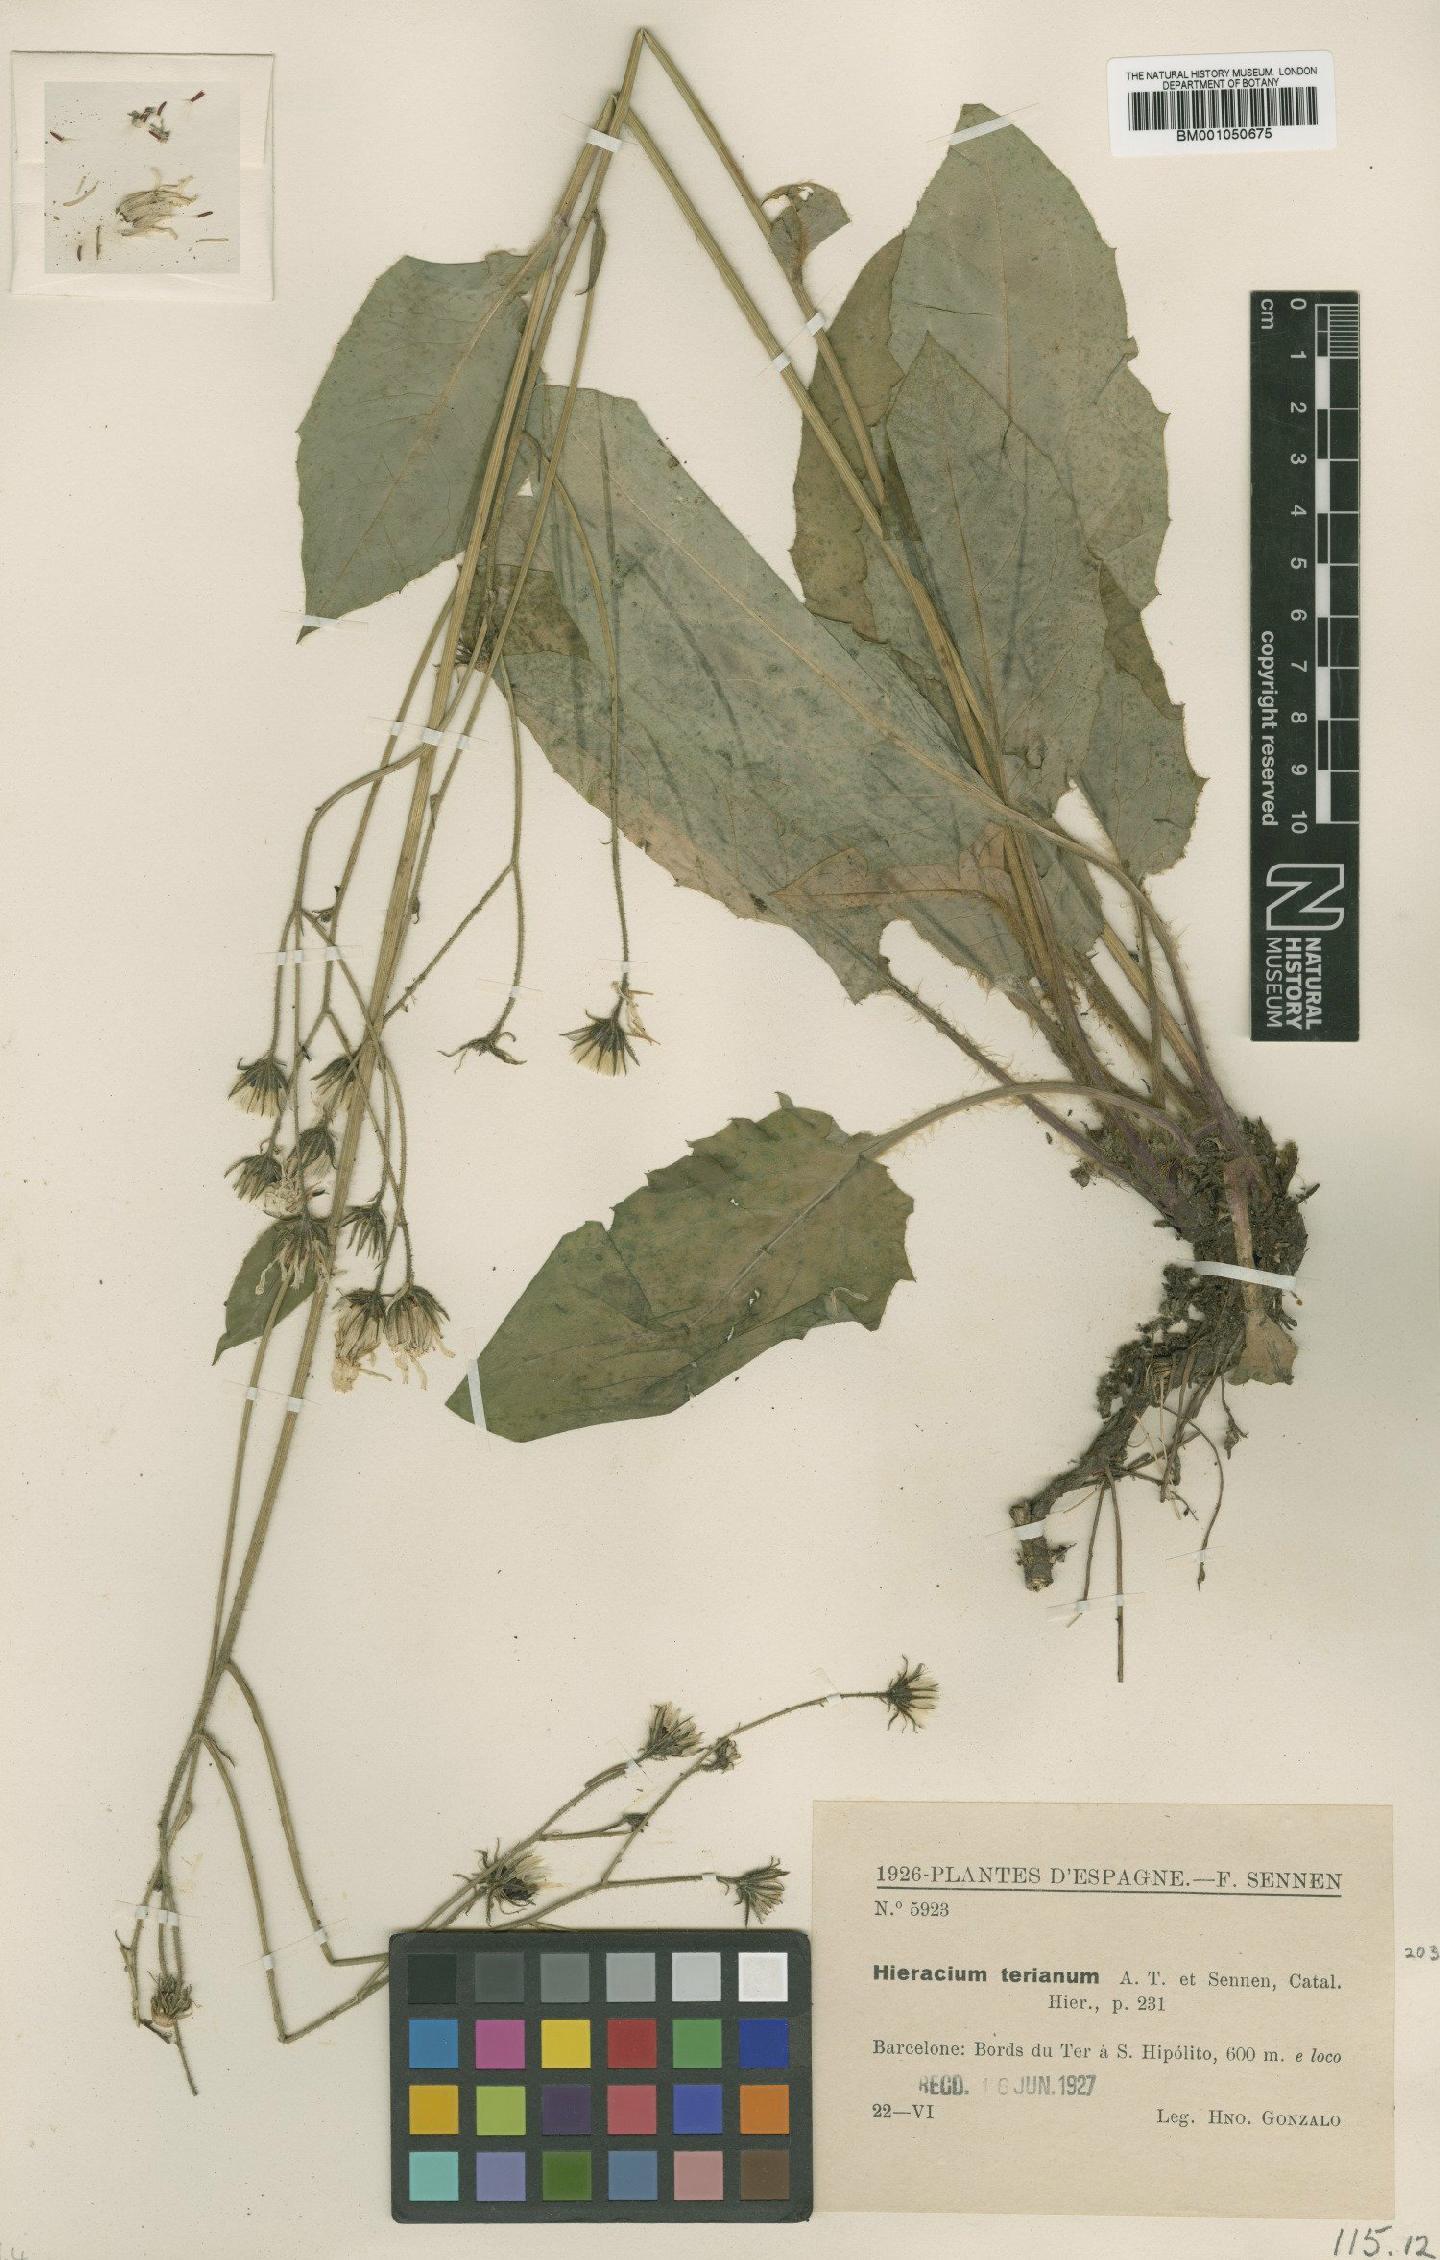 To NHMUK collection (Hieracium bicolor subsp. bourgaei (Boiss.) Zahn; TYPE; NHMUK:ecatalogue:2398041)